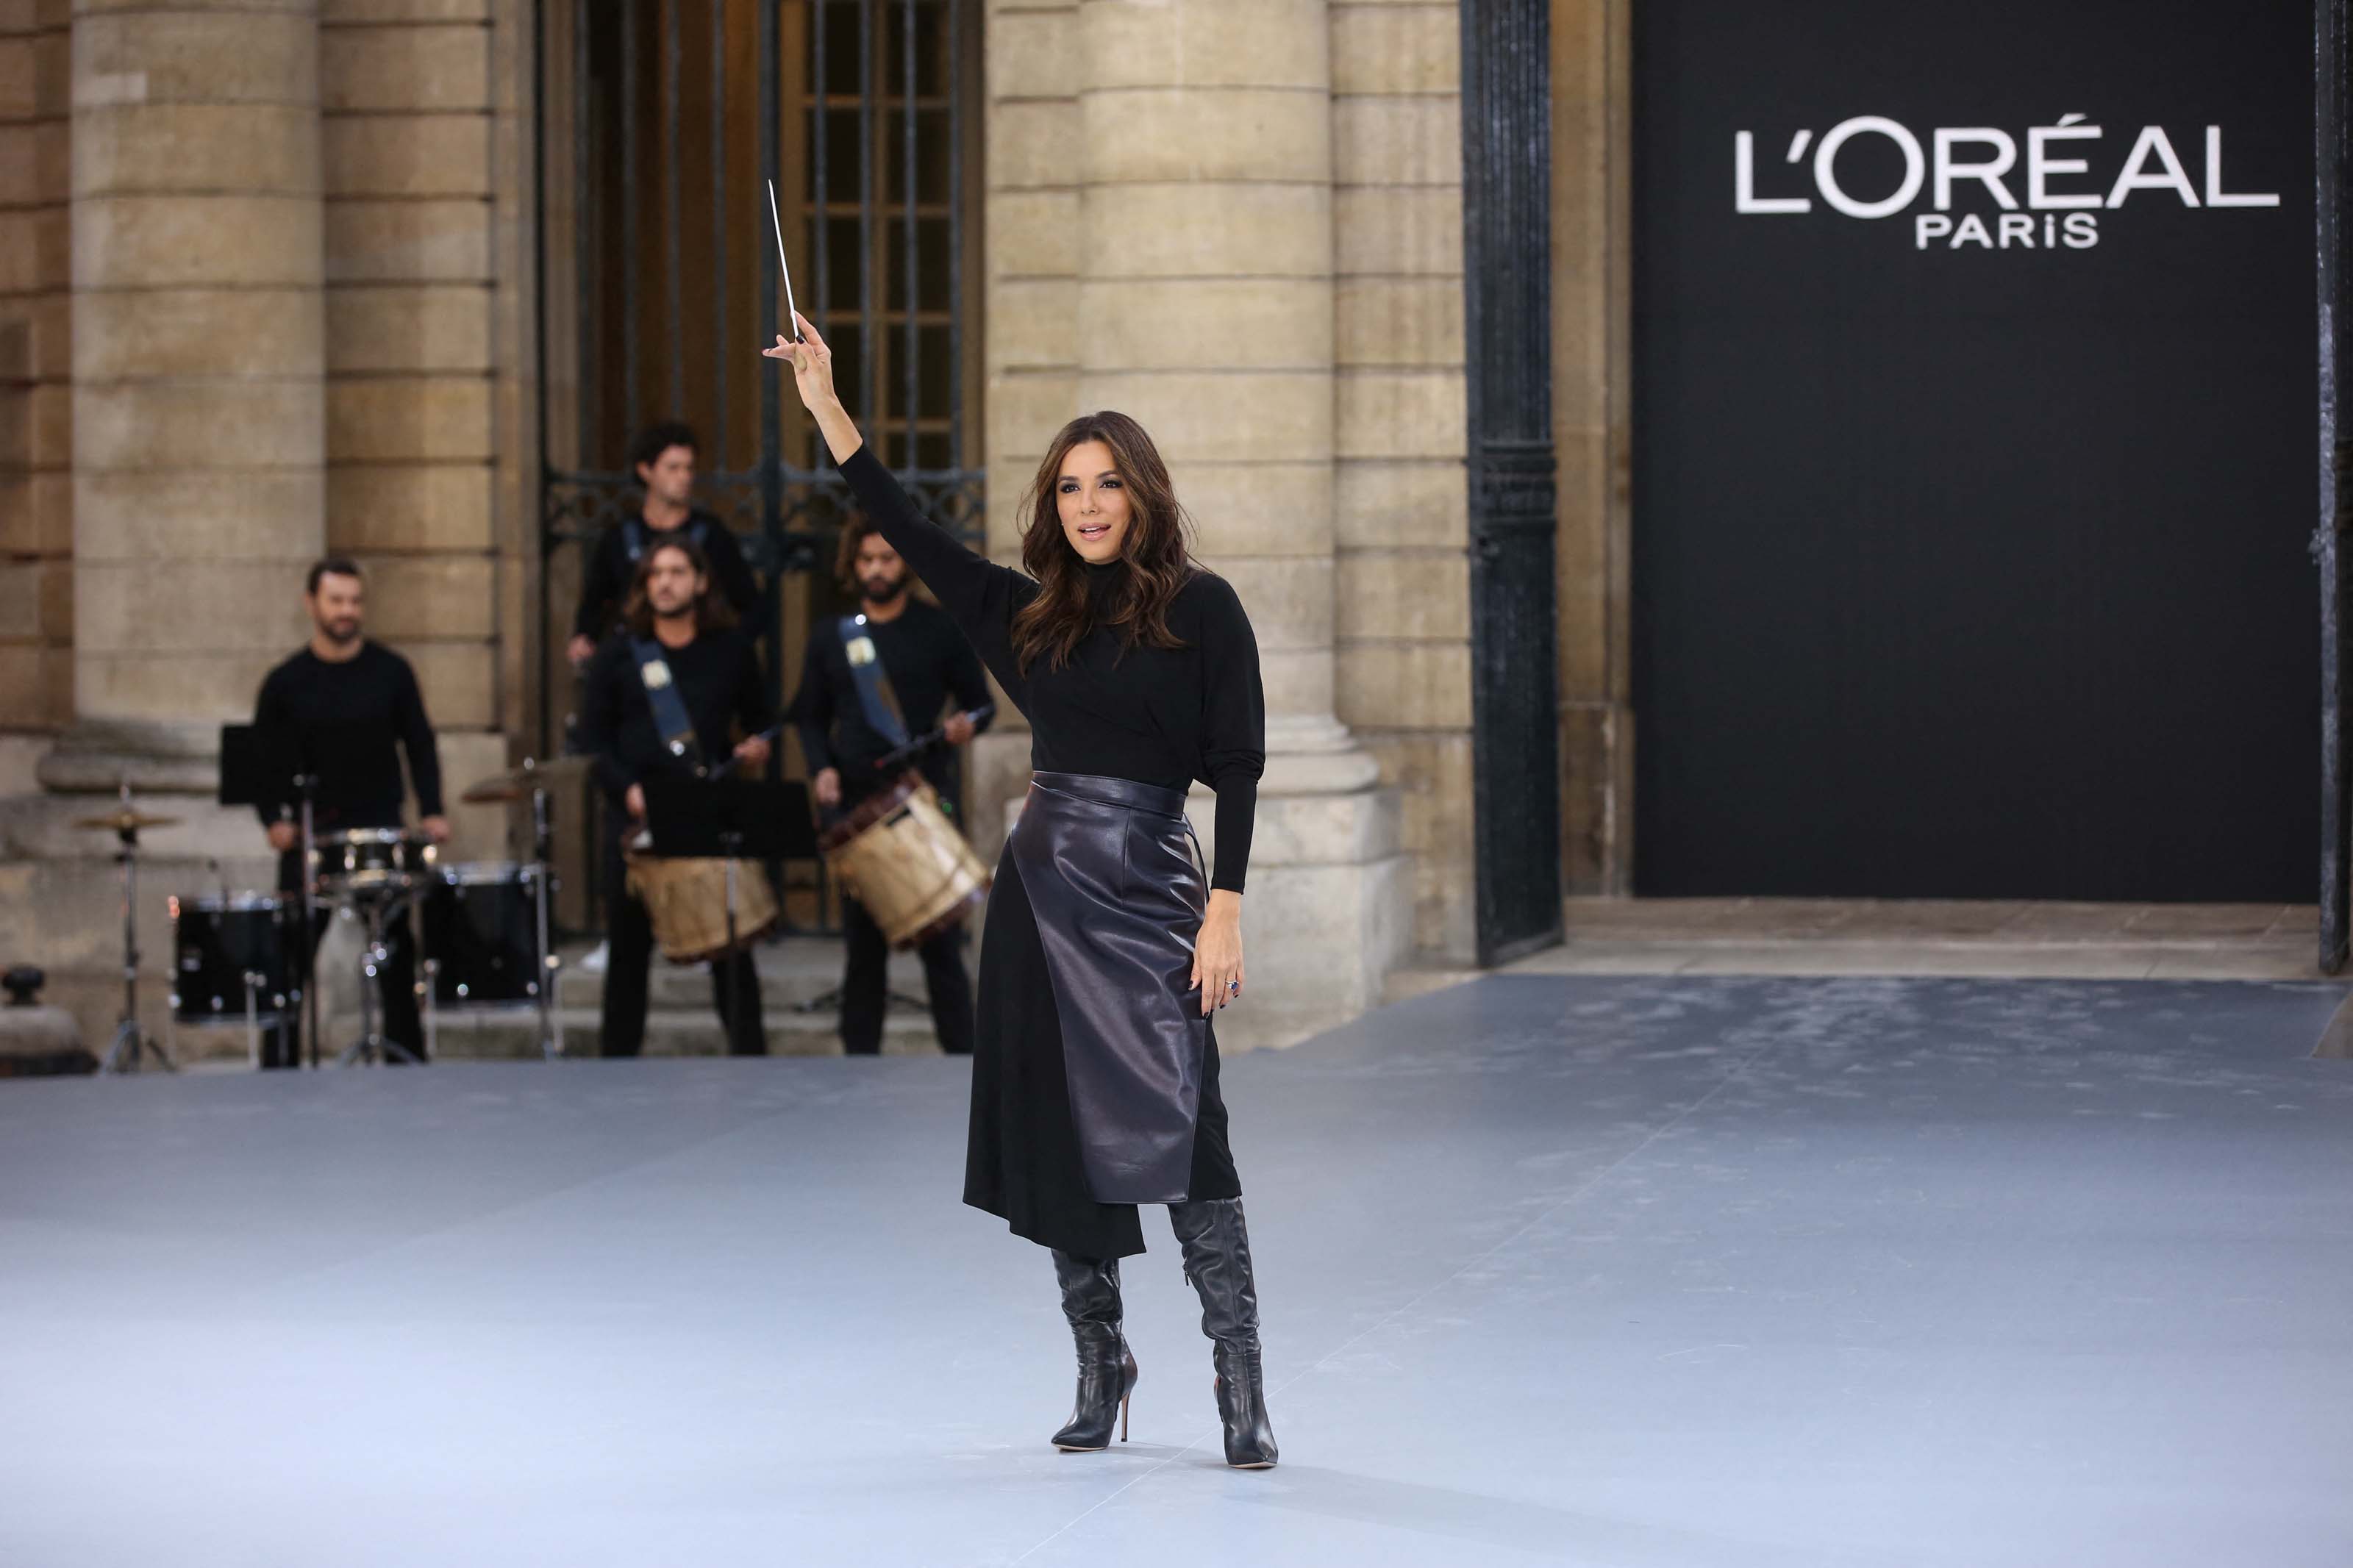 Eva Longoria attends Le Defile L’Oreal Paris Show